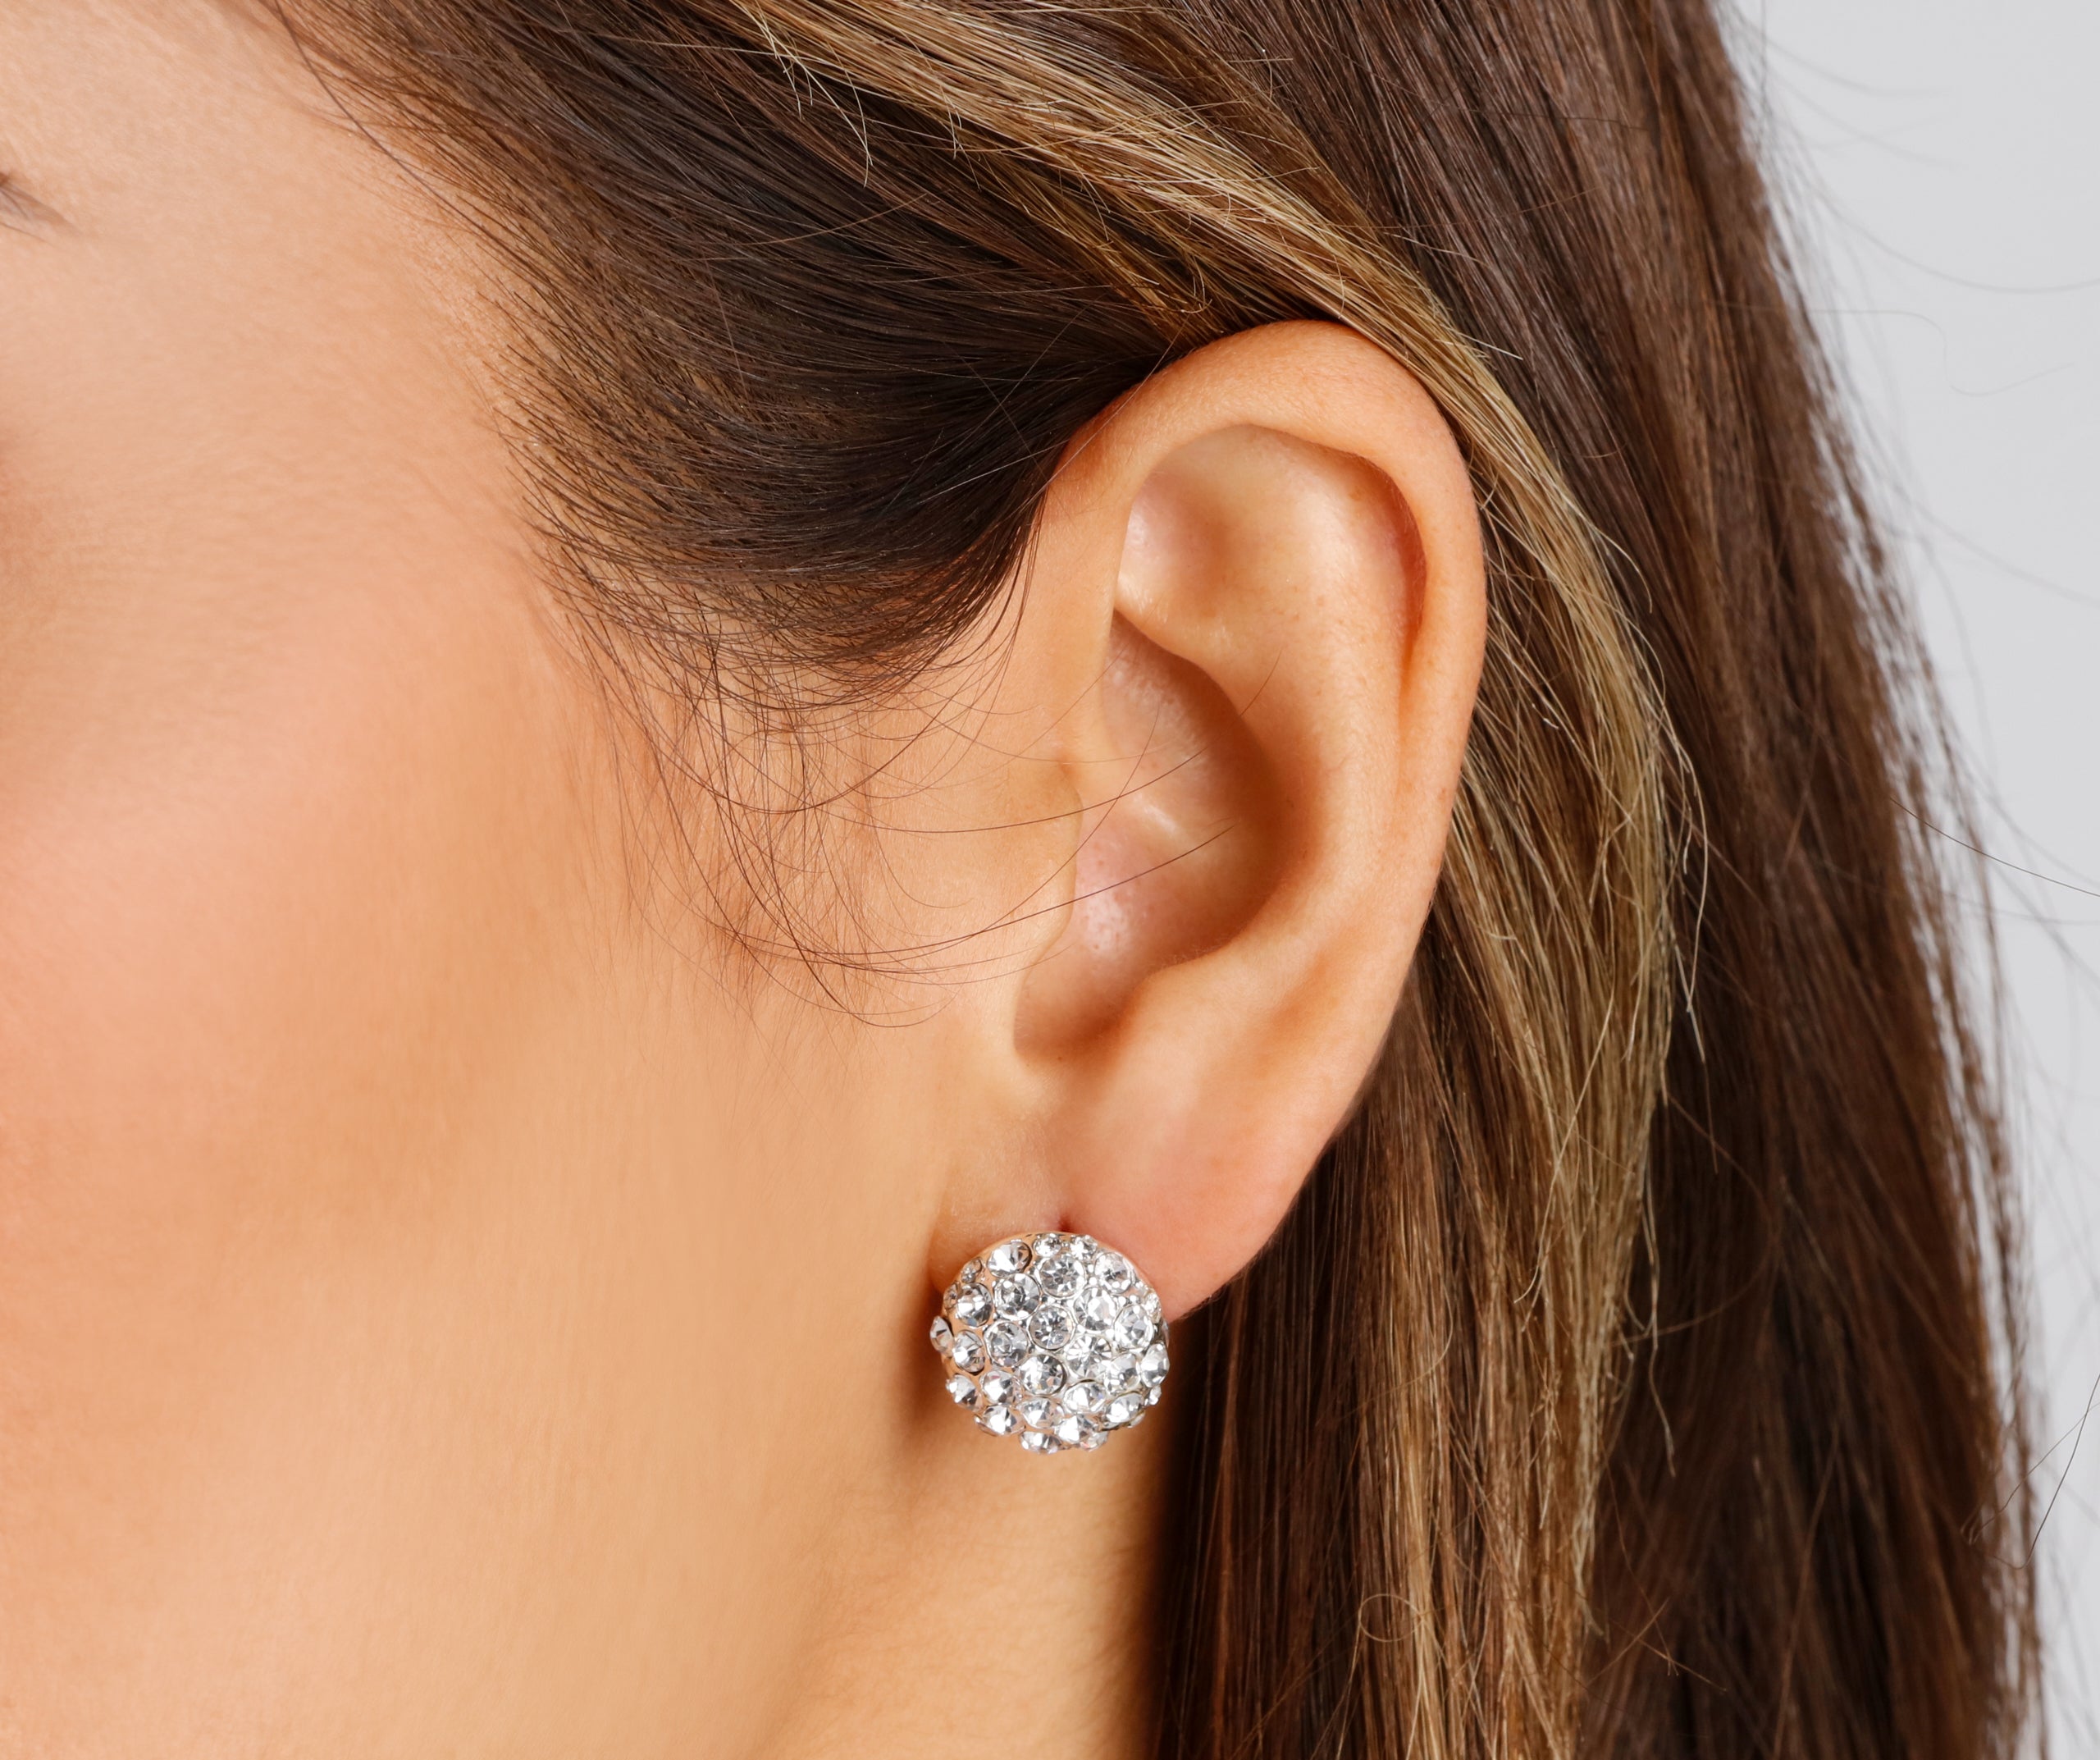 Classy And Chic Rhinestone Earrings Set